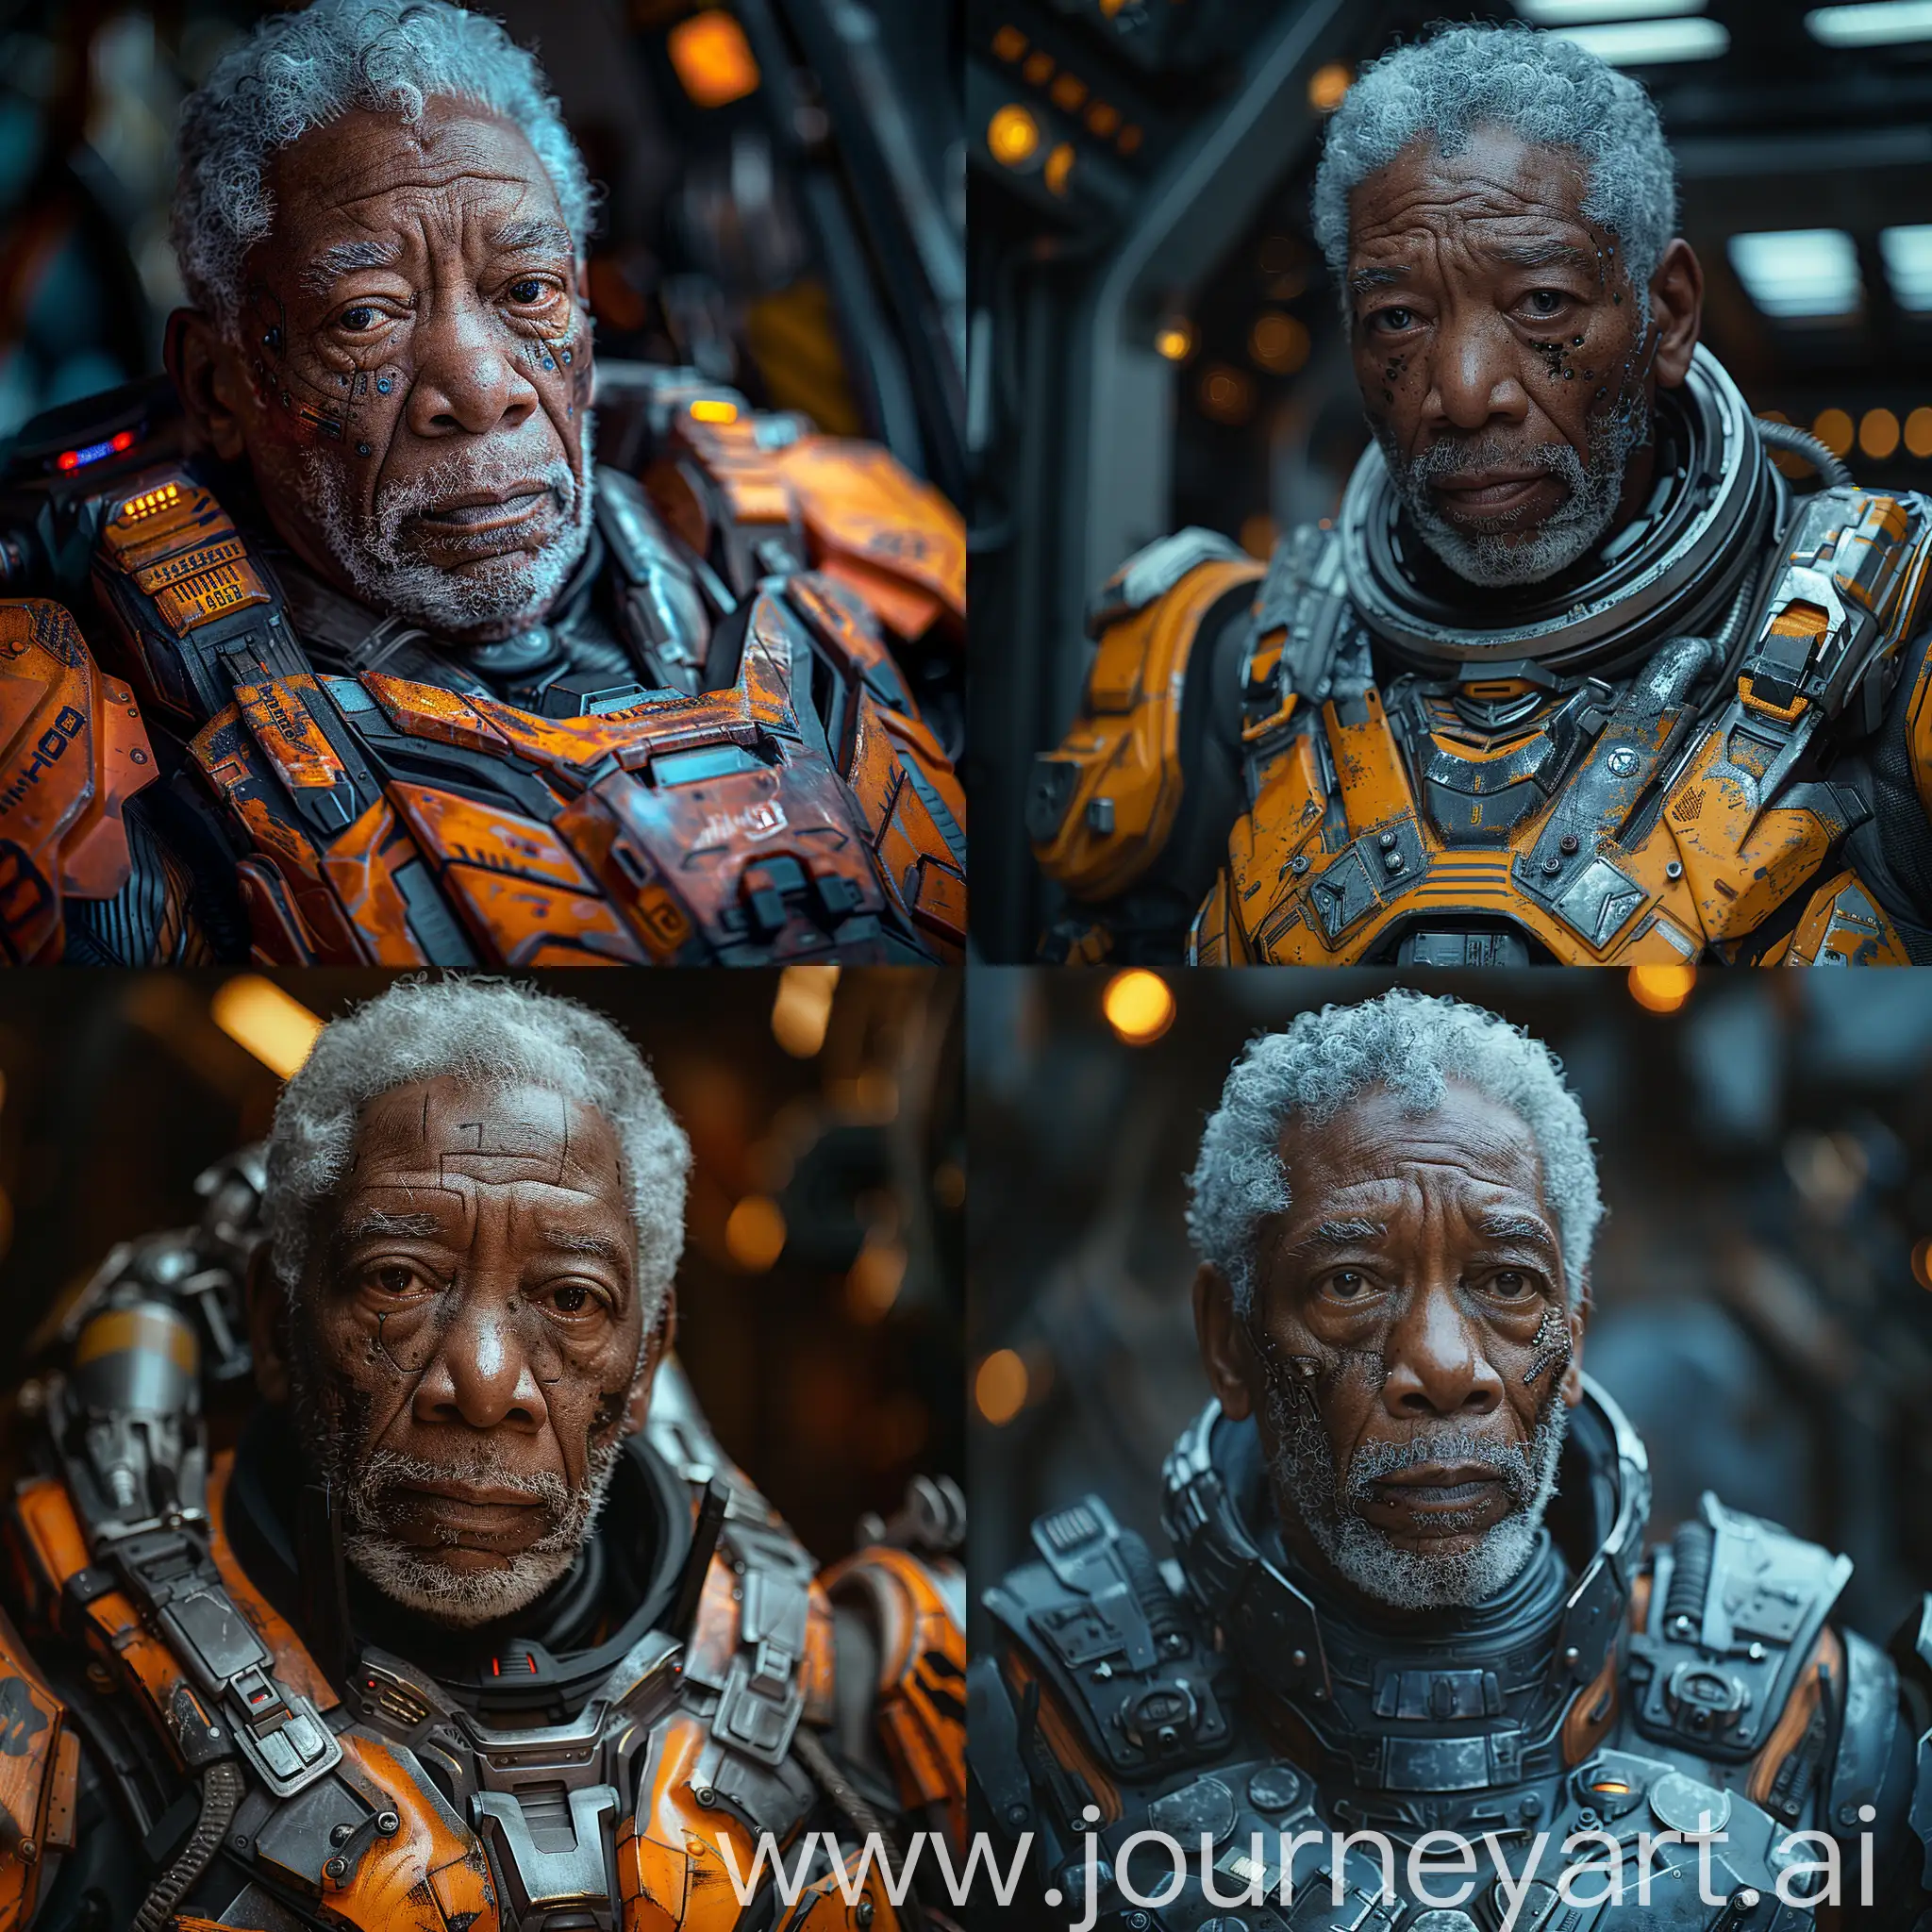 Morgan-Freeman-in-Epic-Mech-Armor-Cinematic-Film-Still